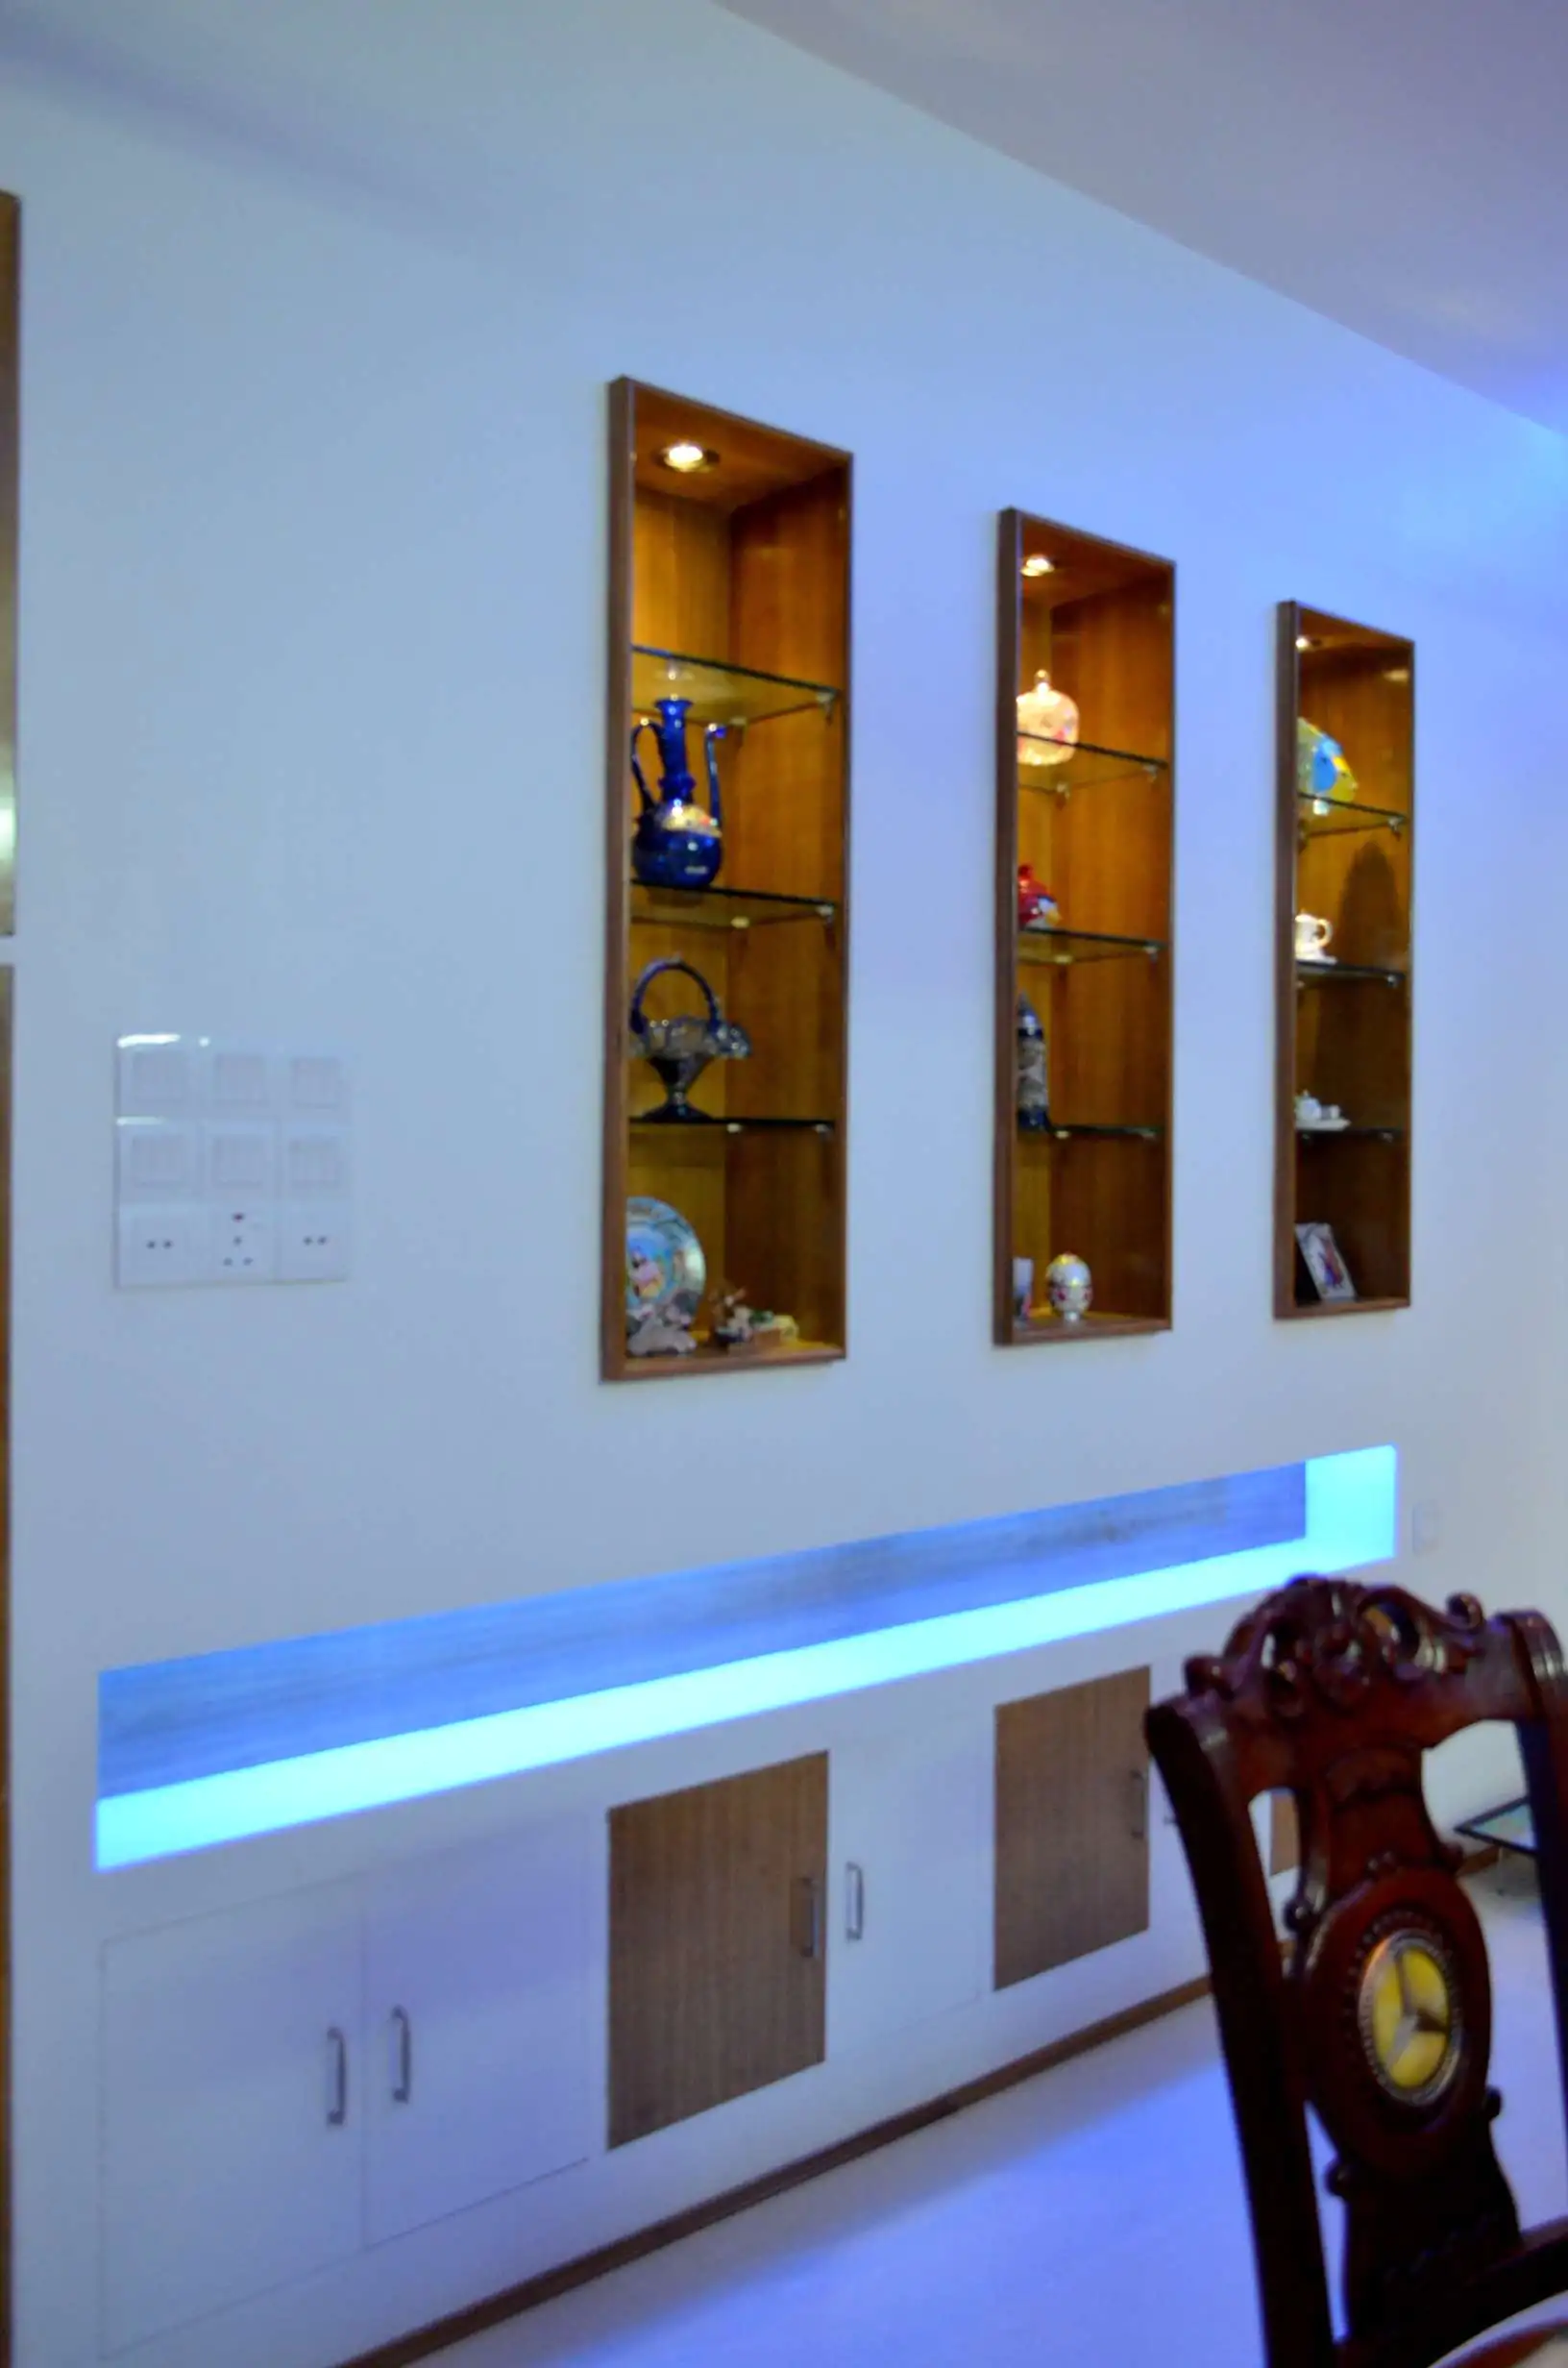 Masud Alam Dhanmondi Complete Project Home Interior Design (14)